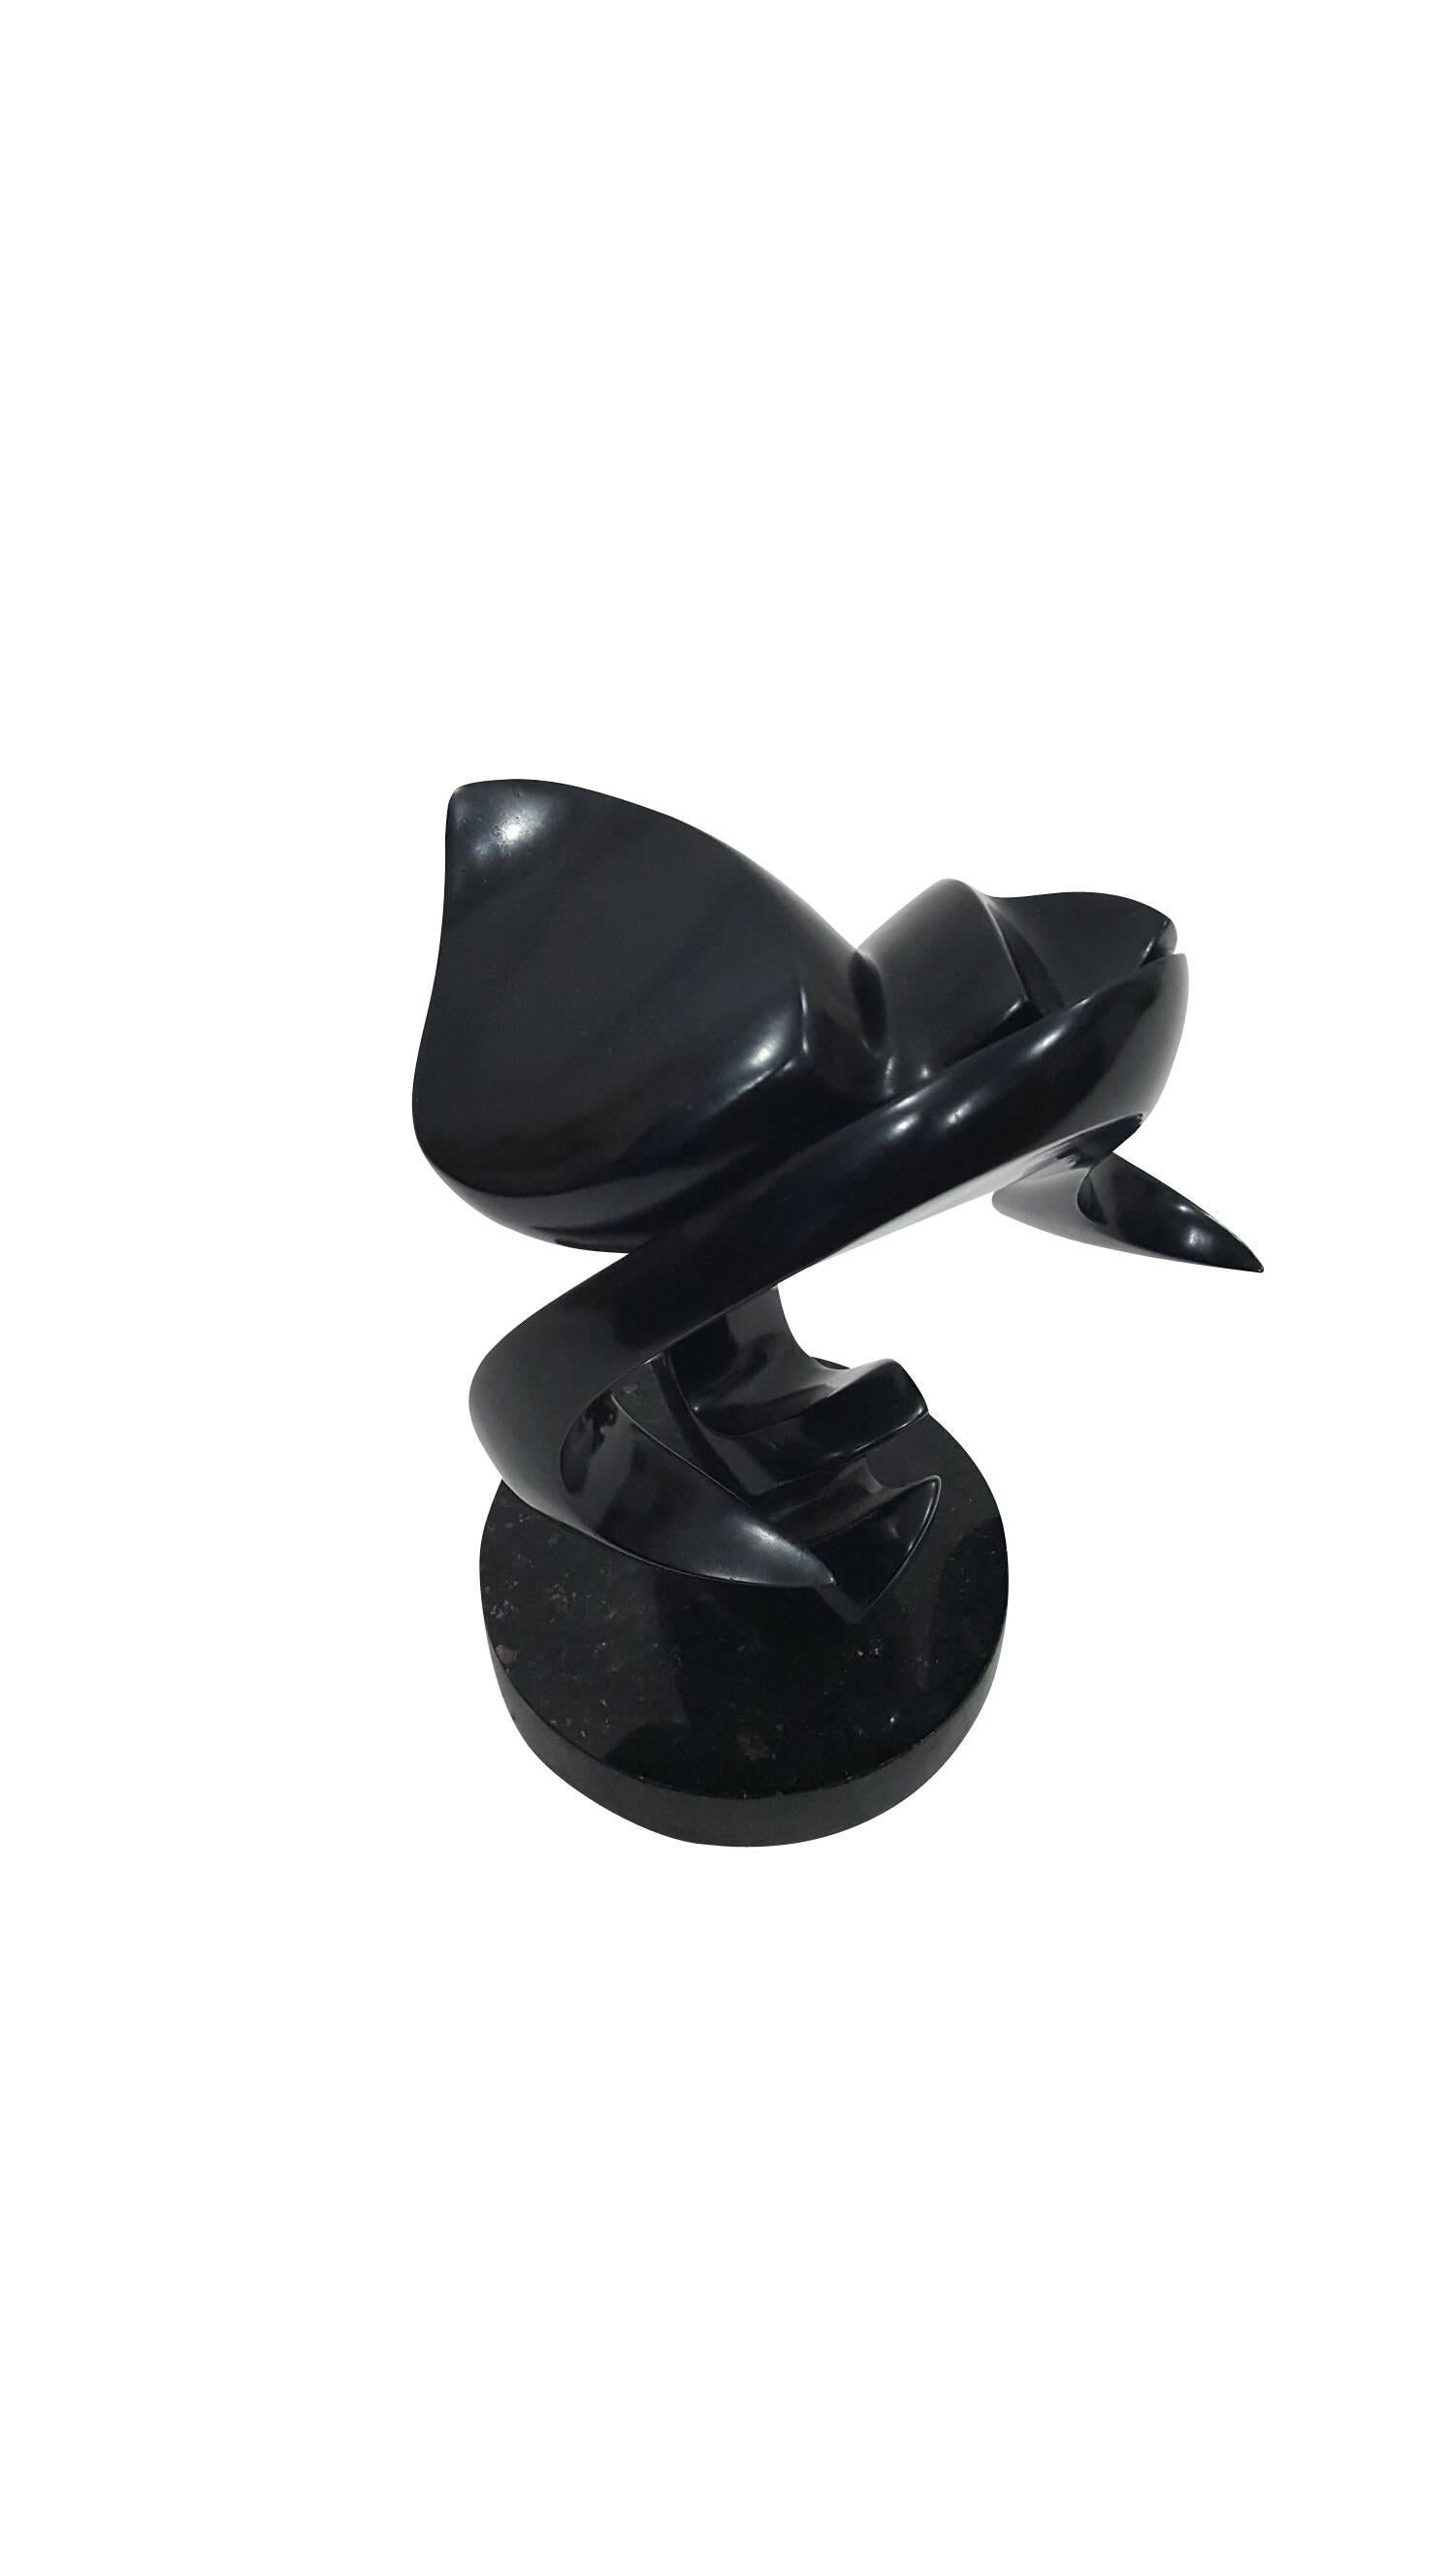 North American Amour by Alexander Krivosheiw, Sculpture in Black Bronze For Sale